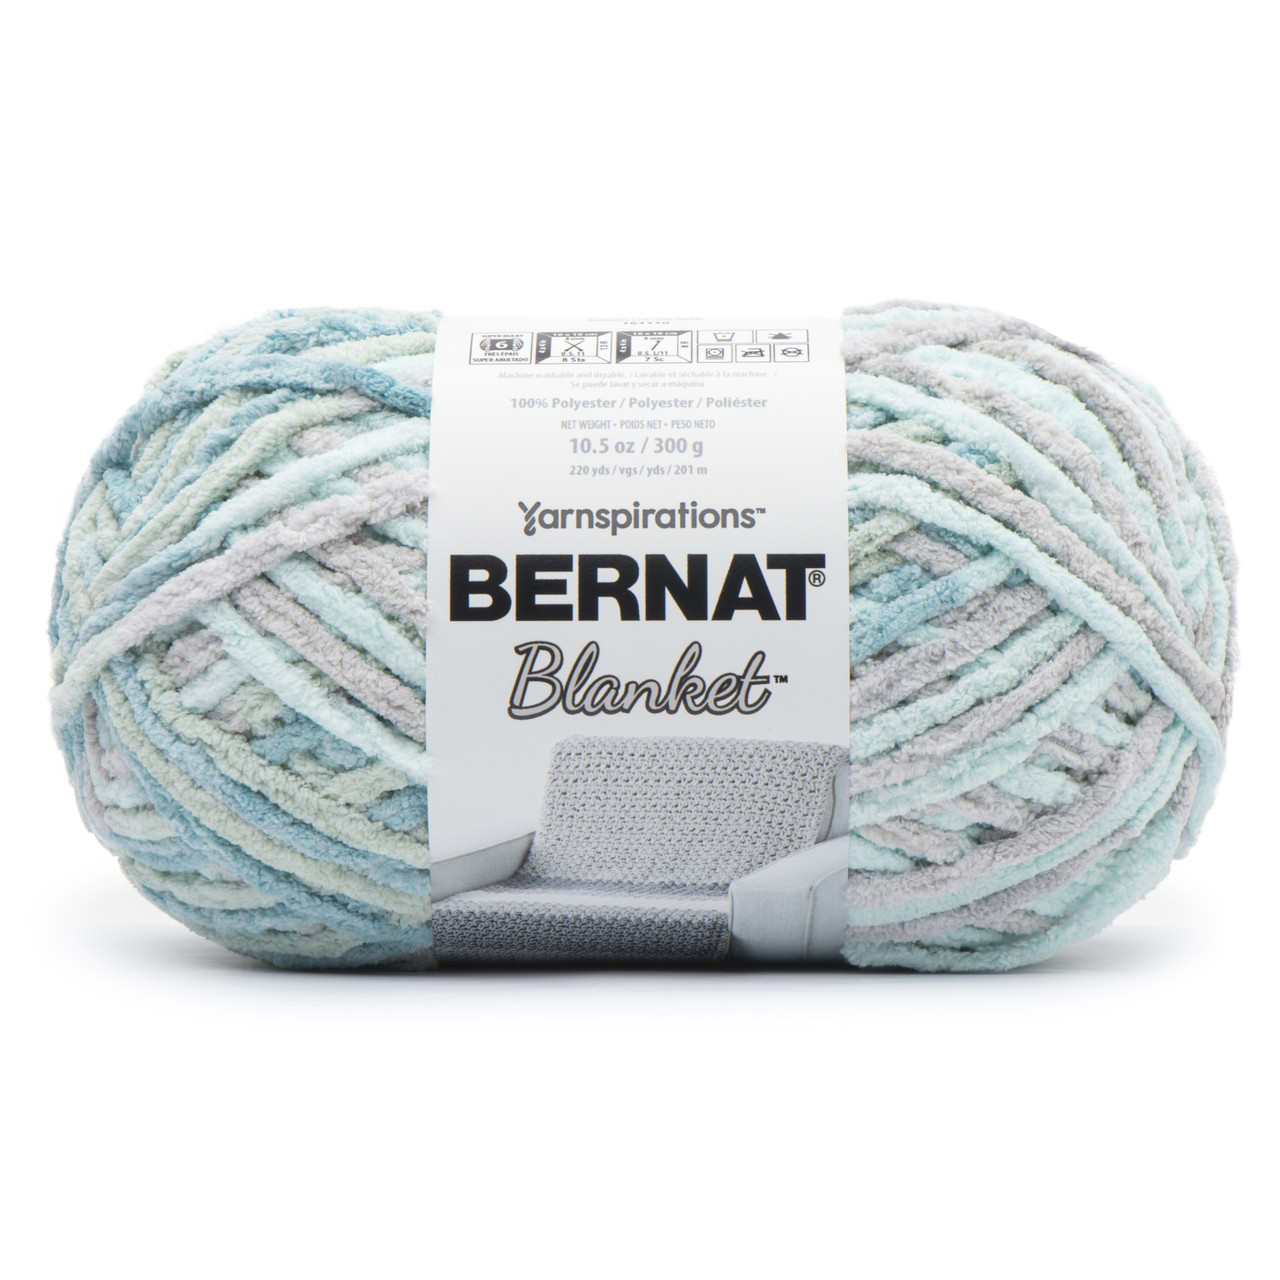 Bernat Blanket Yarn - Big Ball (10.5 oz) - 2 Pack with Patterns (Sonoma)